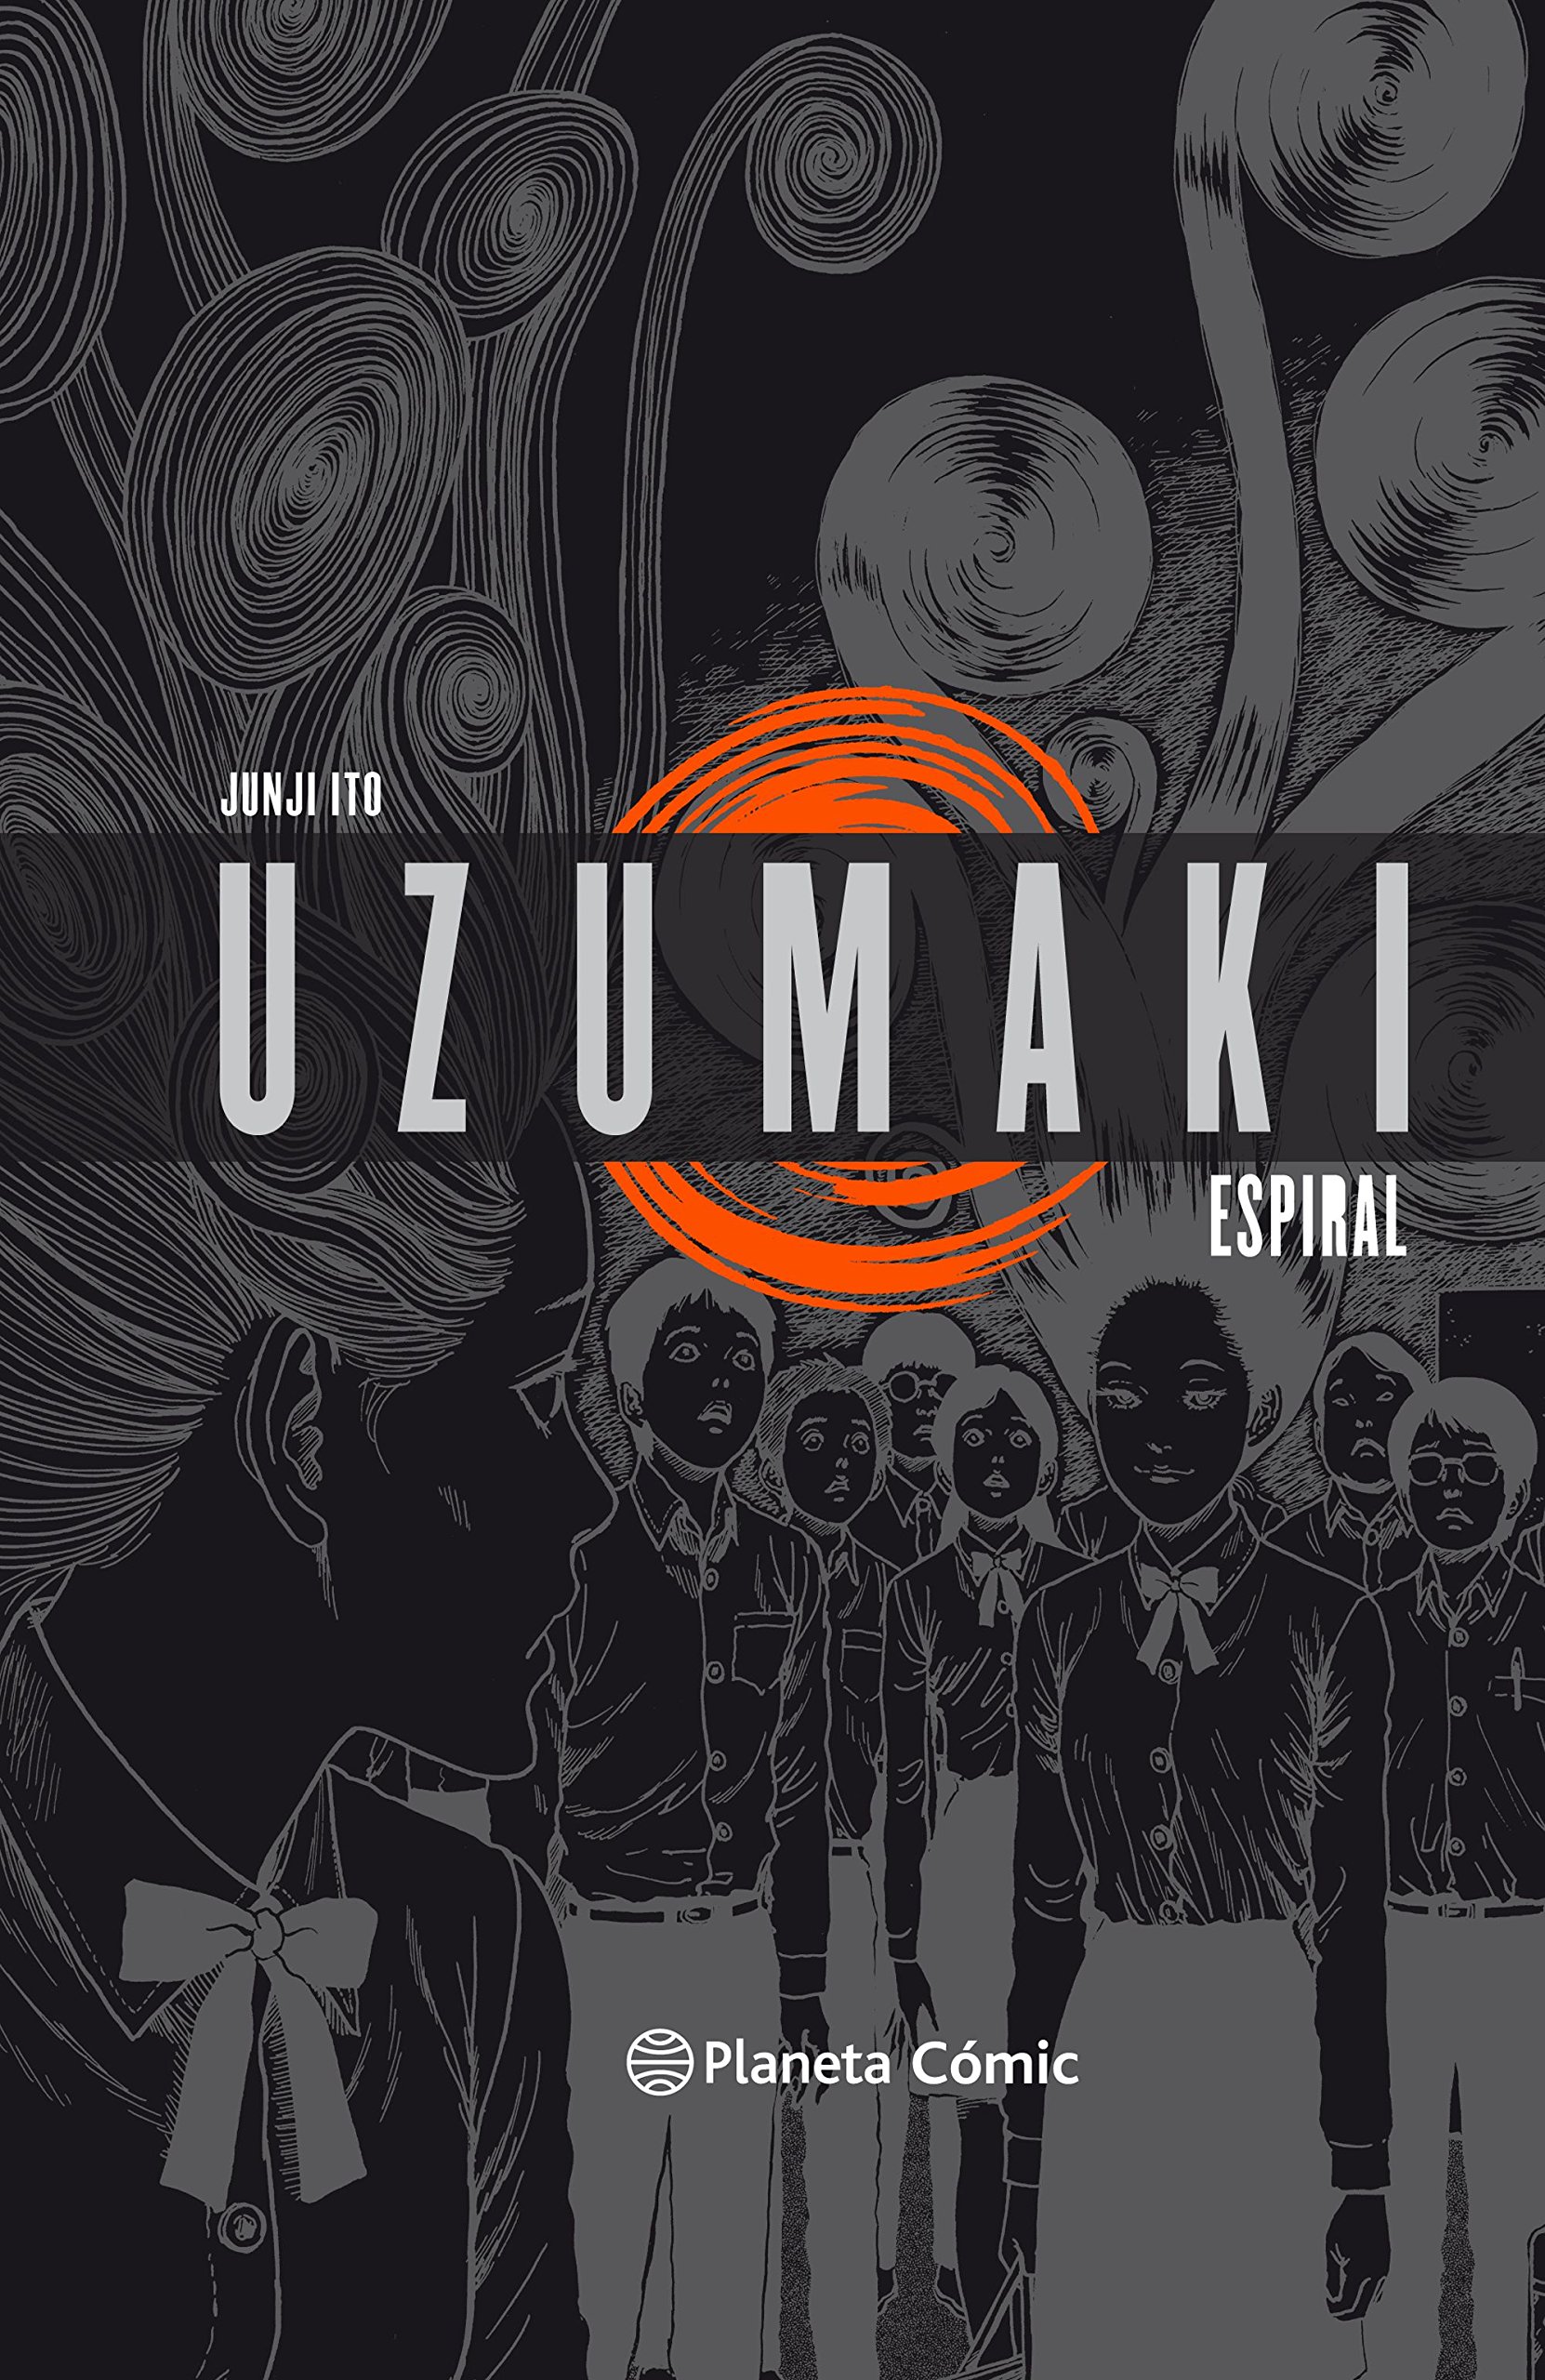 Uzumaki: Espiral (GraphicNovel, Spanish language, 2017)